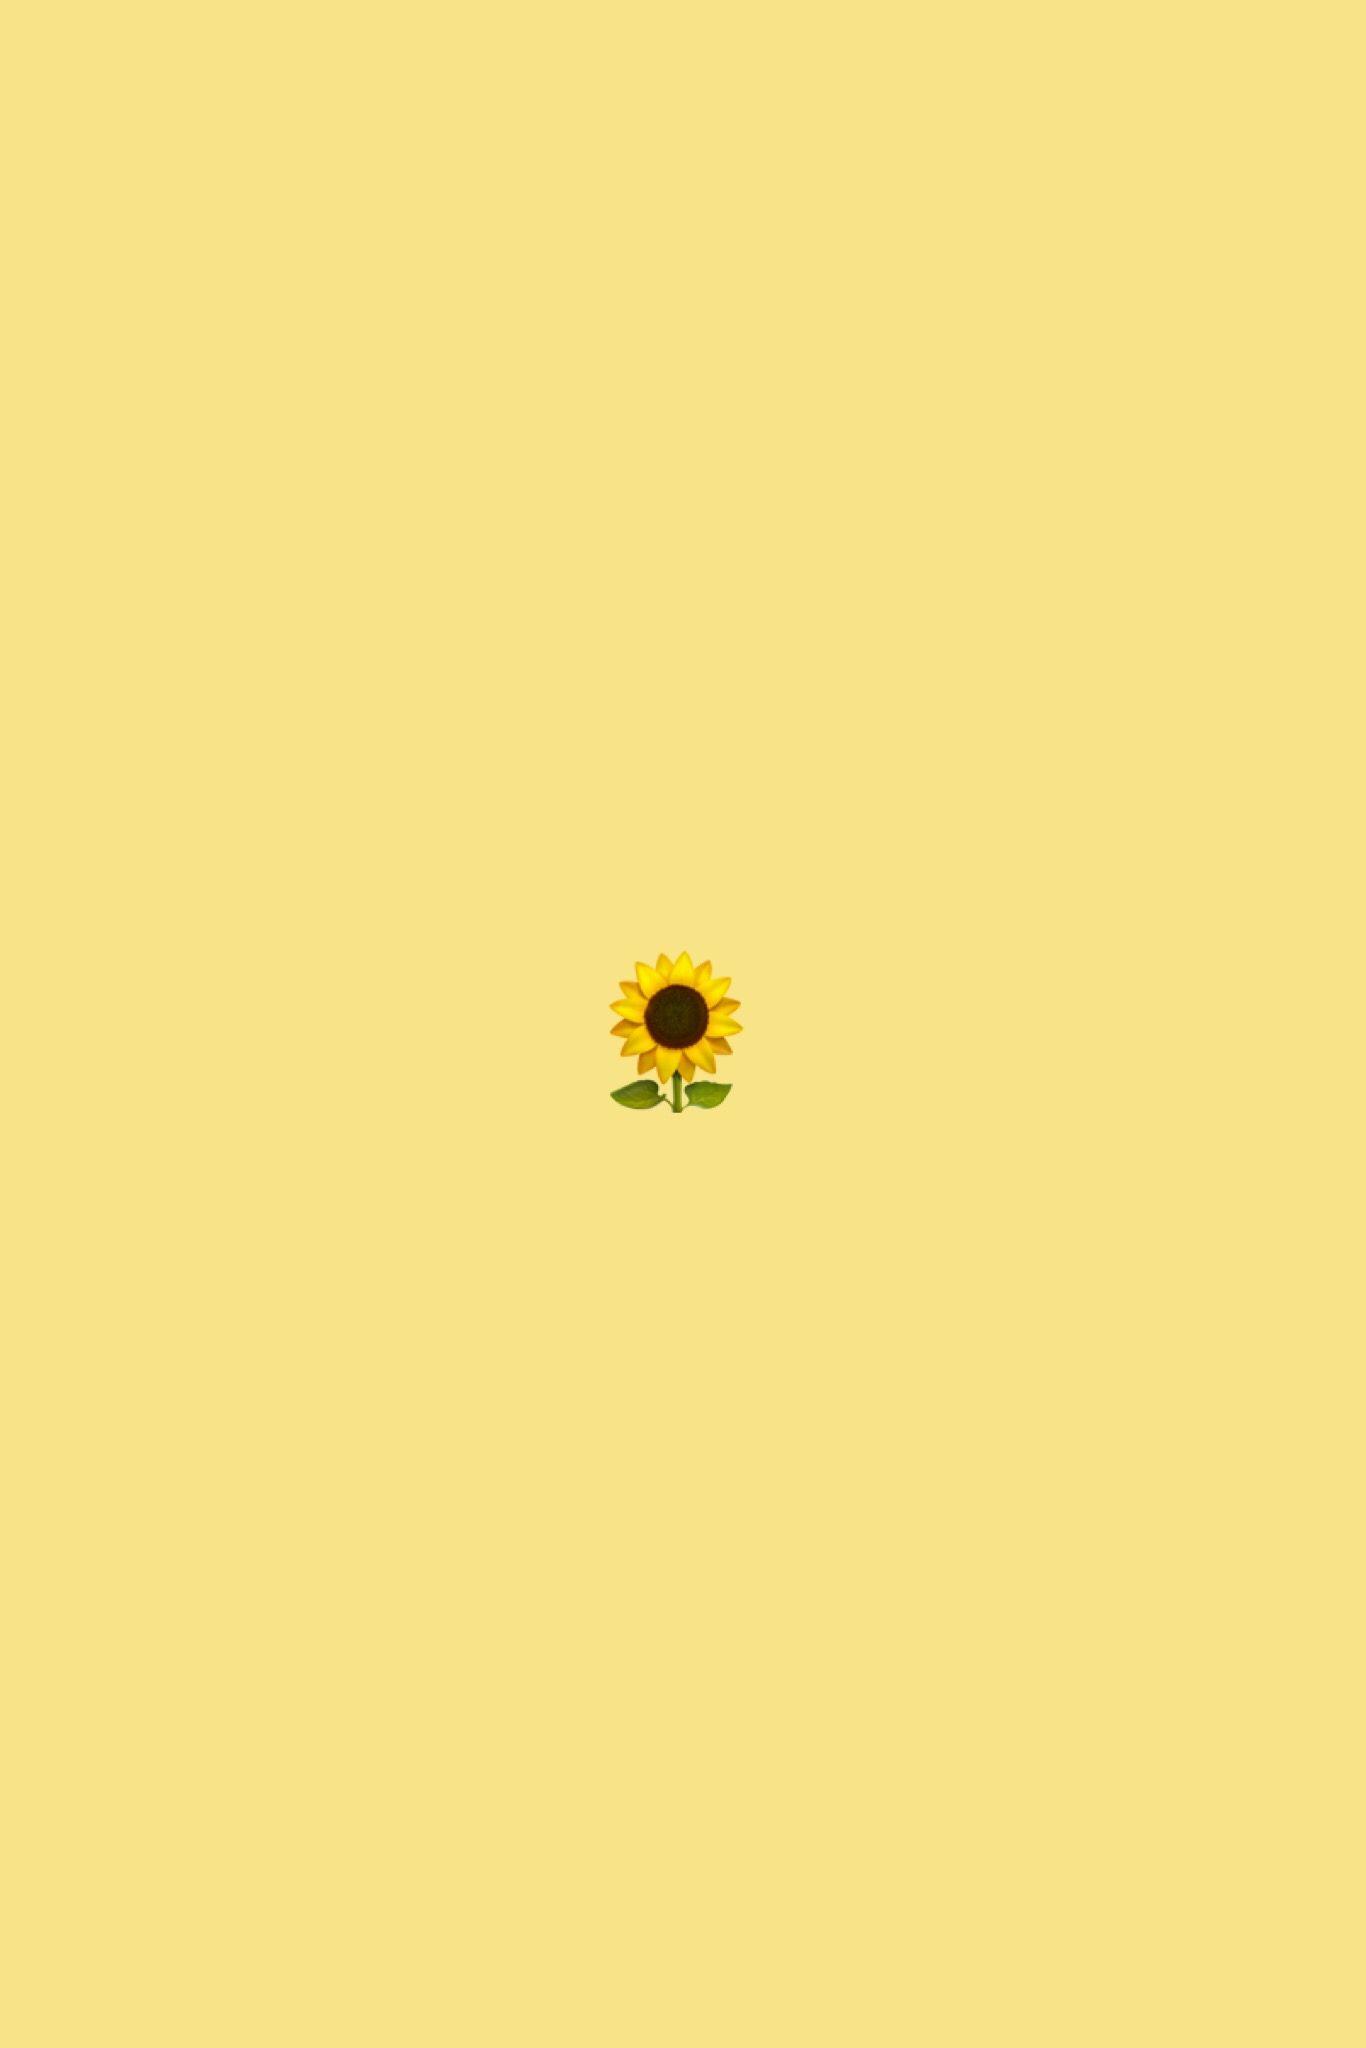 A sunflower on yellow background - Sunflower